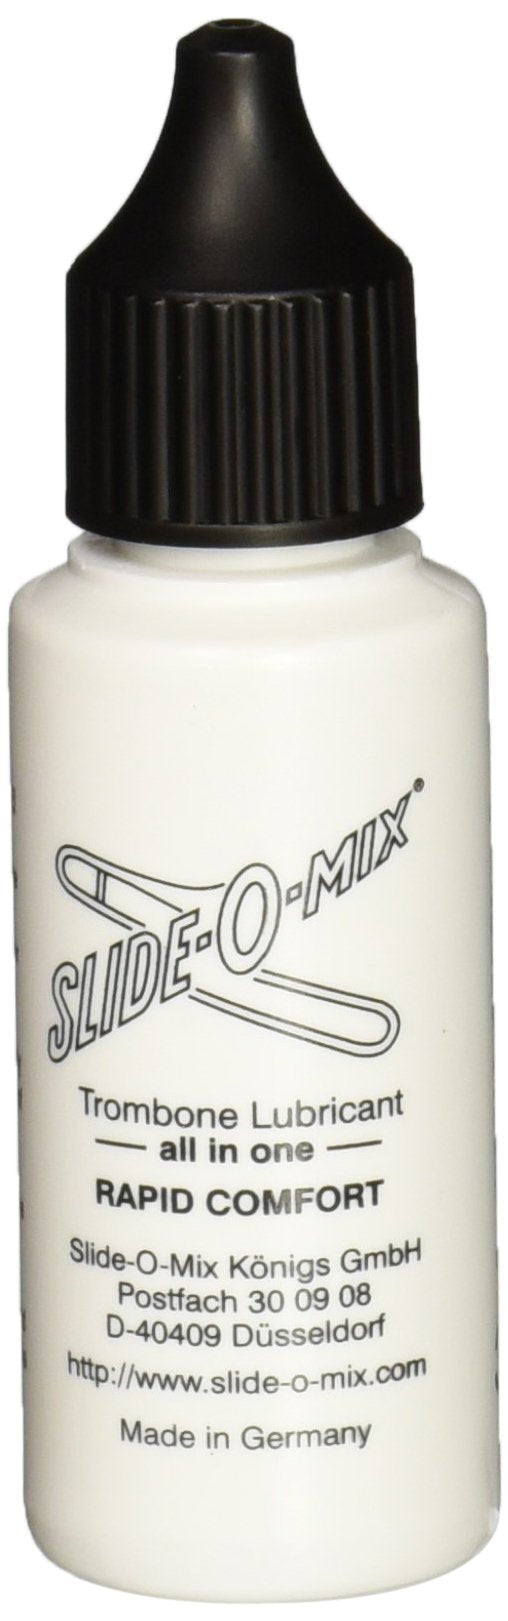 Selmer 337RC Slide-o-Mix Rapid Comfort Trombone Lubricant, 30 ml